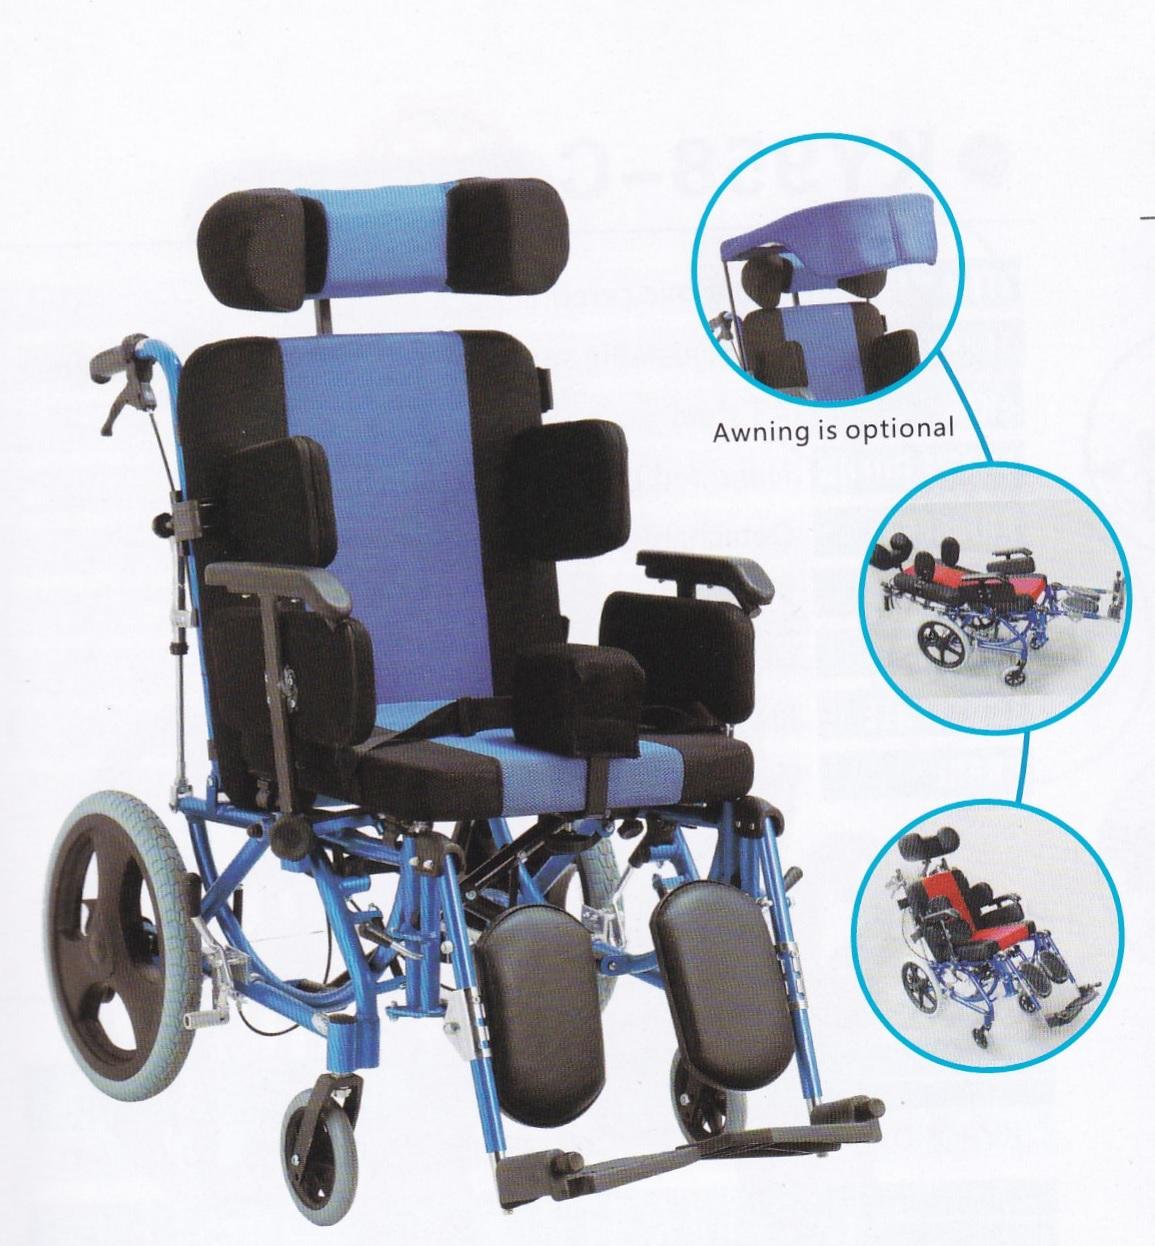 heavy duty wheelchair